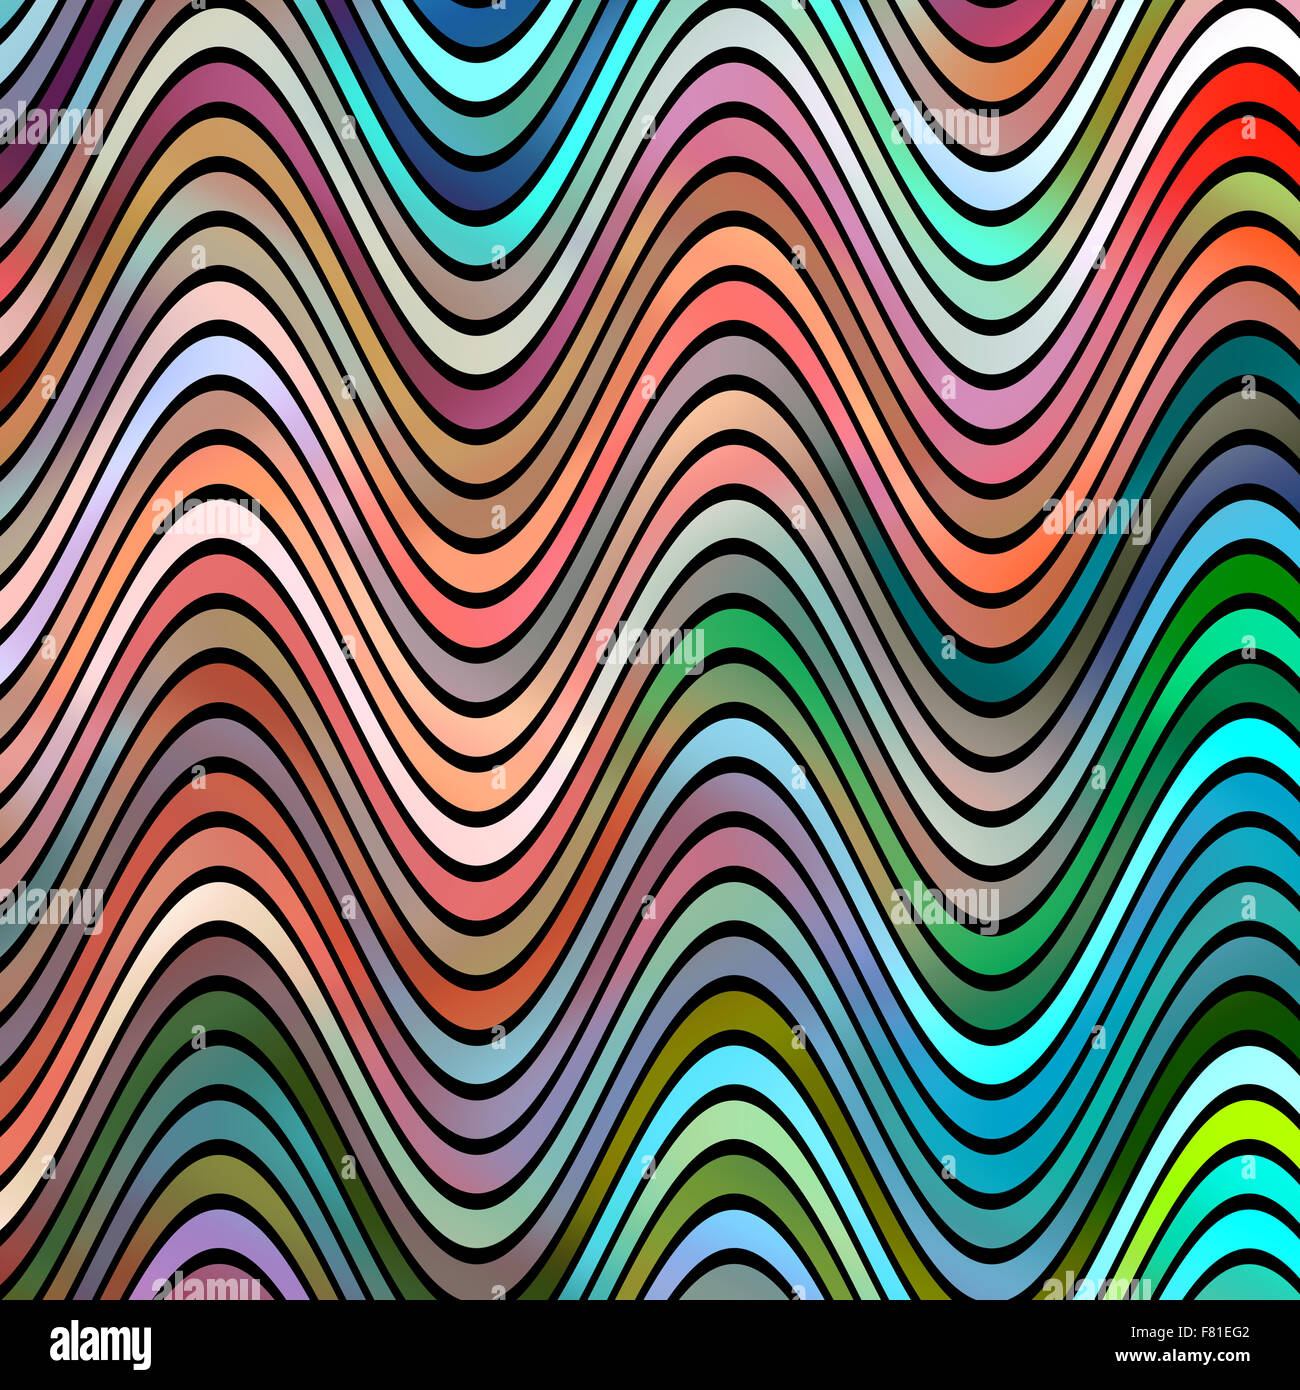 Multicoloured stripes waves pattern illustration. Stock Photo